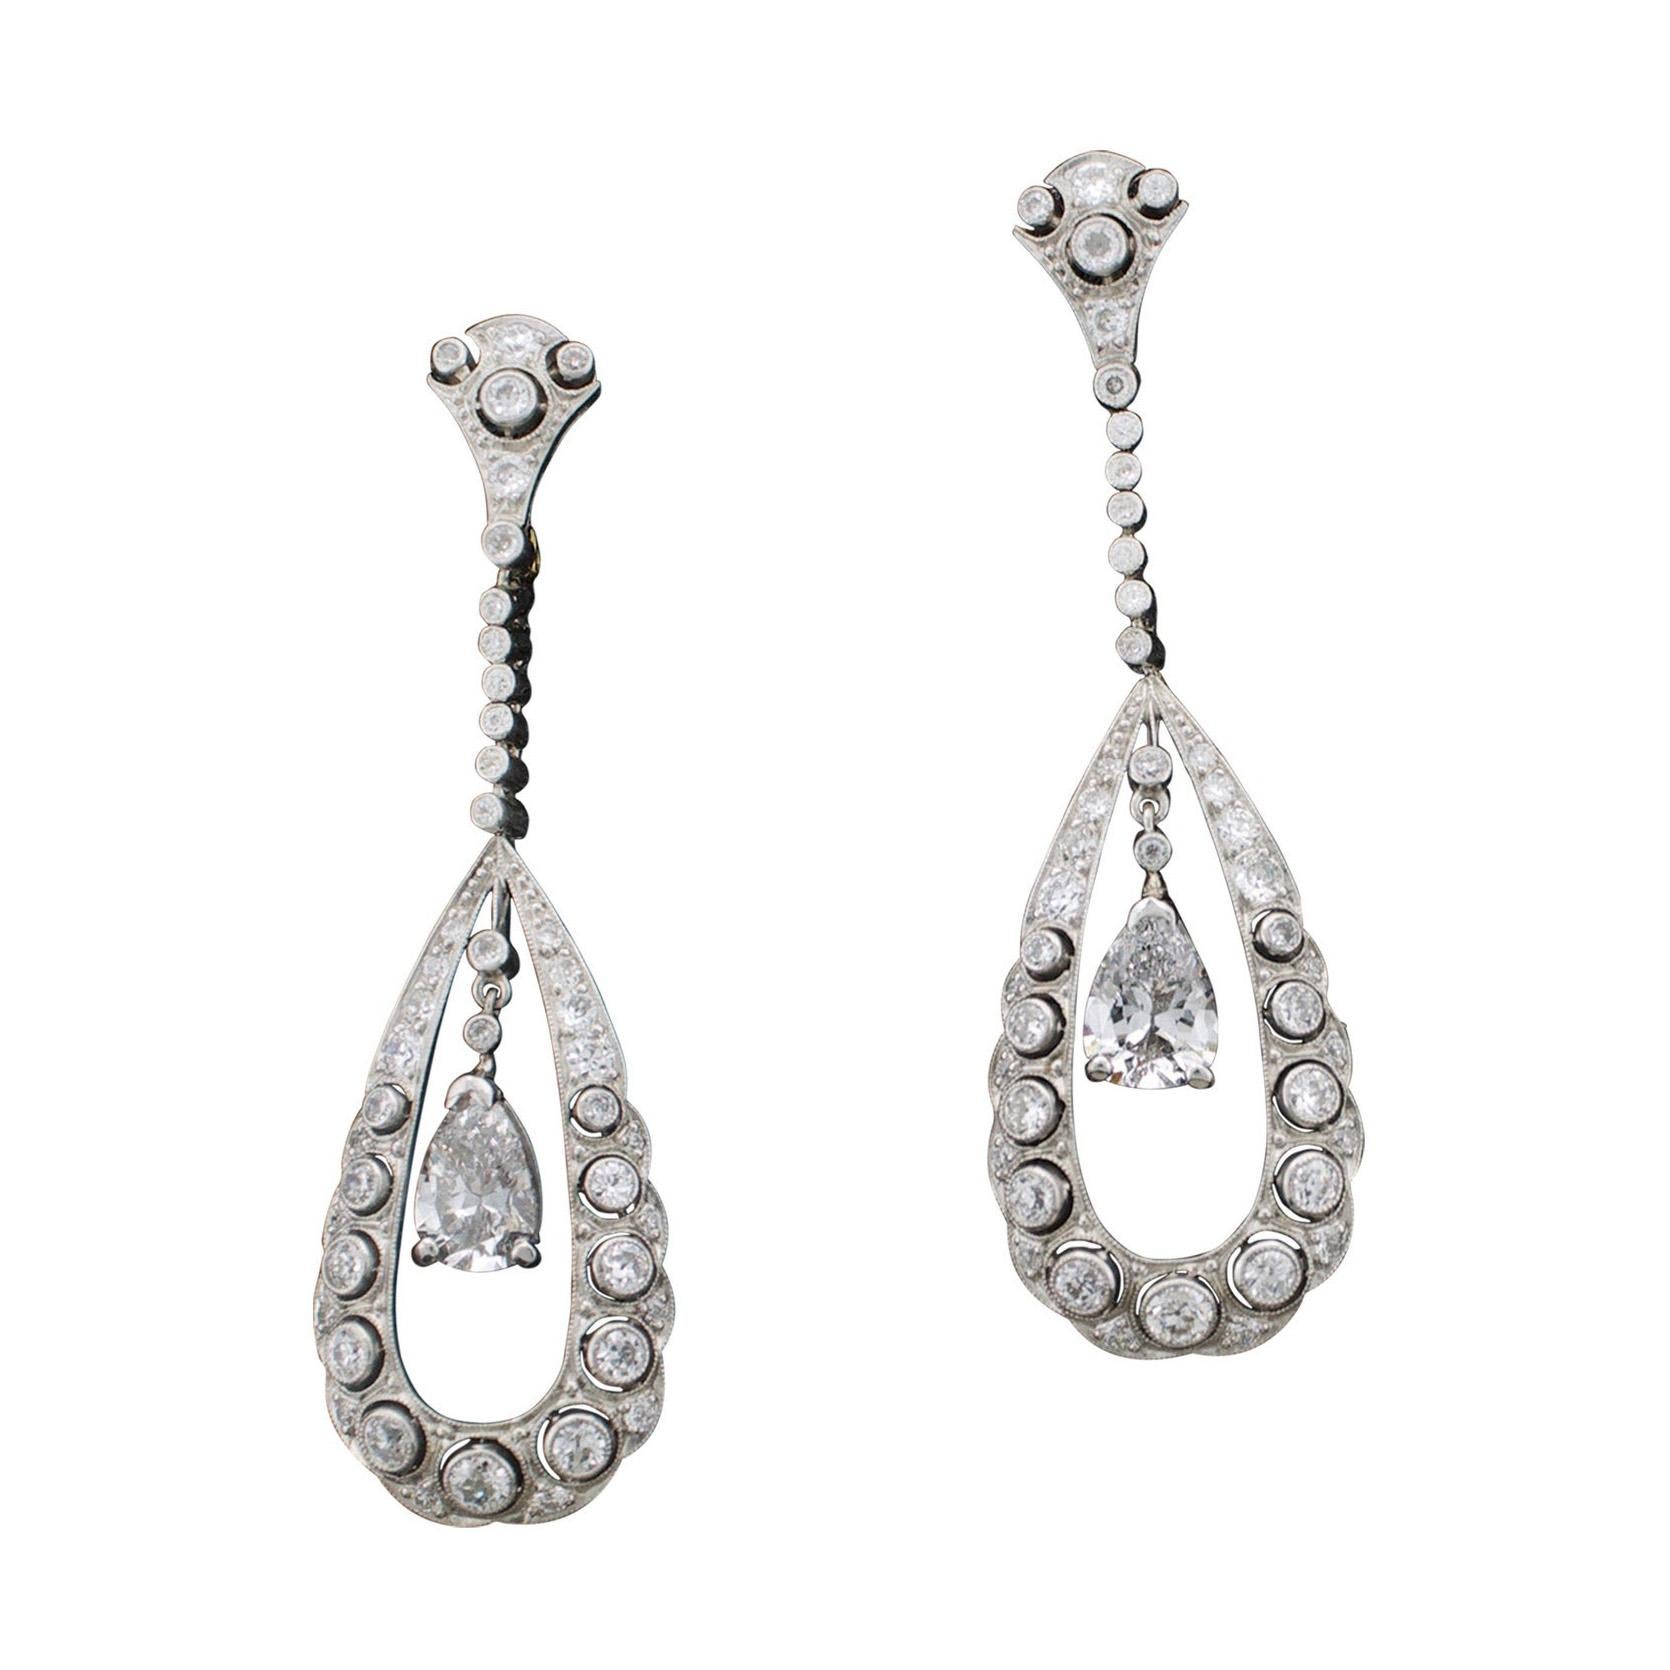 Art Deco Platinum Diamond Dangling Earrings 3.75 Carats